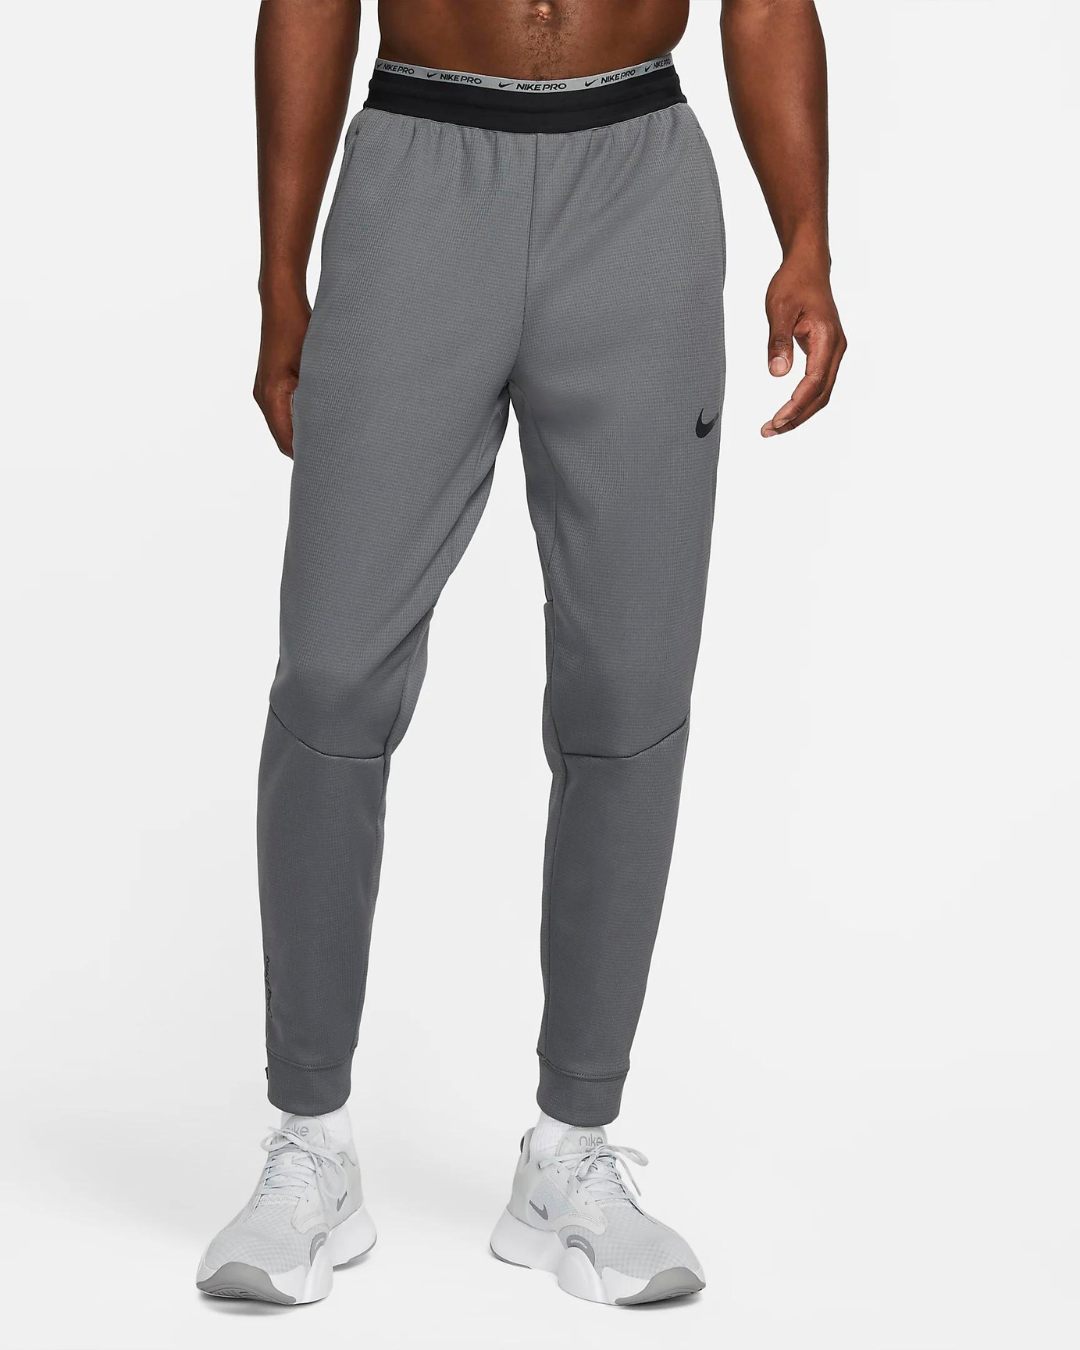 Pantalon Nike Therma Sphere - Grau